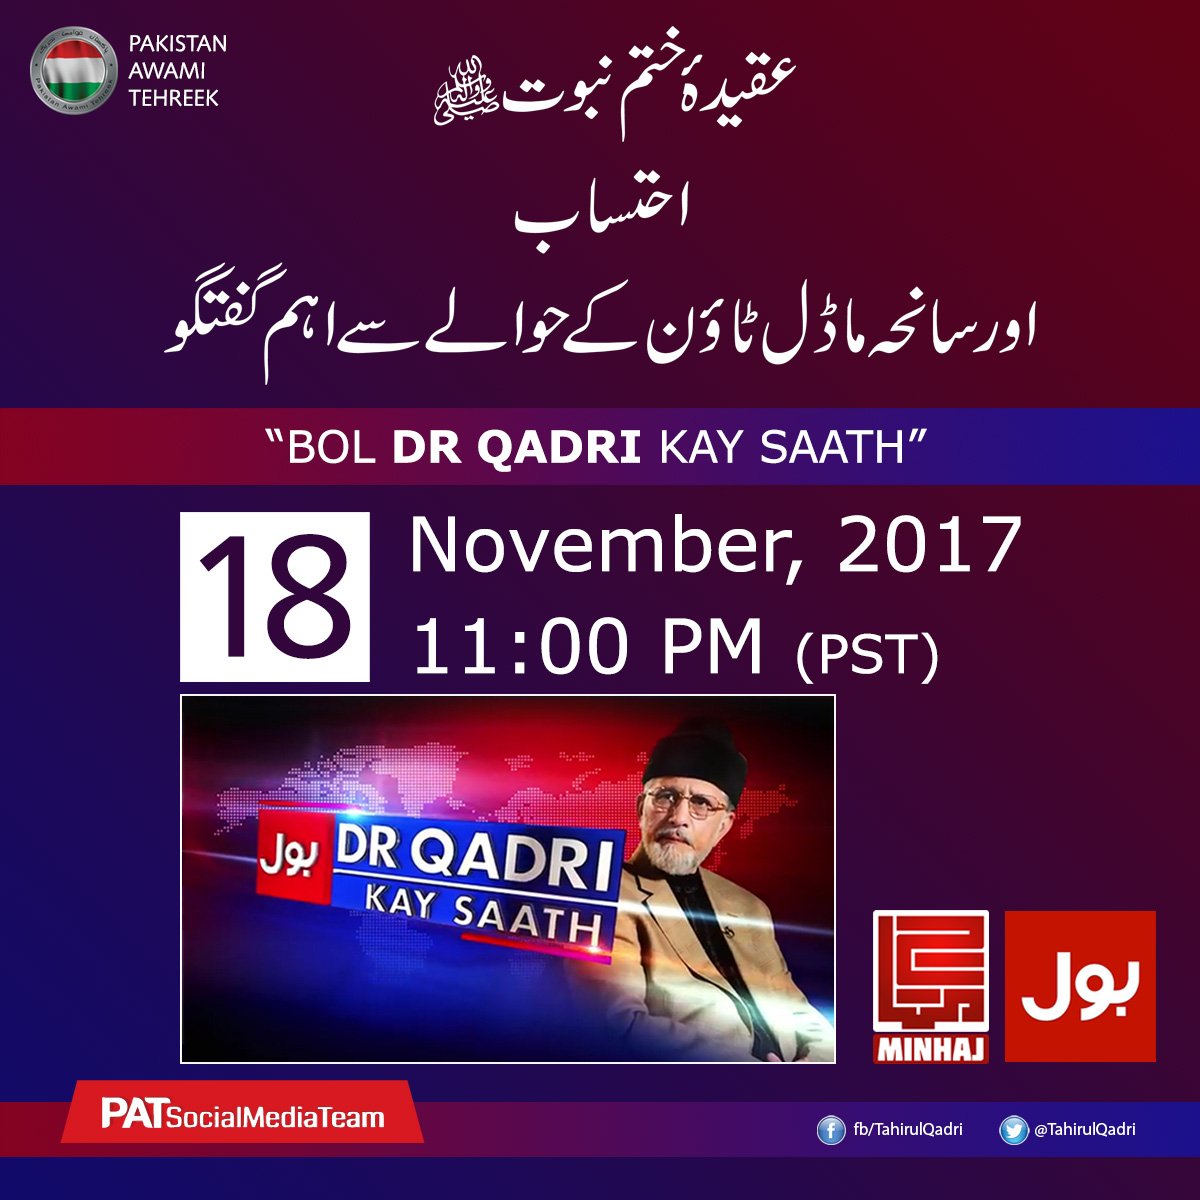 Watch Dr Tahir-ul-Qadri in program 'BOL Dr Qadri Kay Saath' on BOL News | Saturday, 18 November, at 11:00 PM